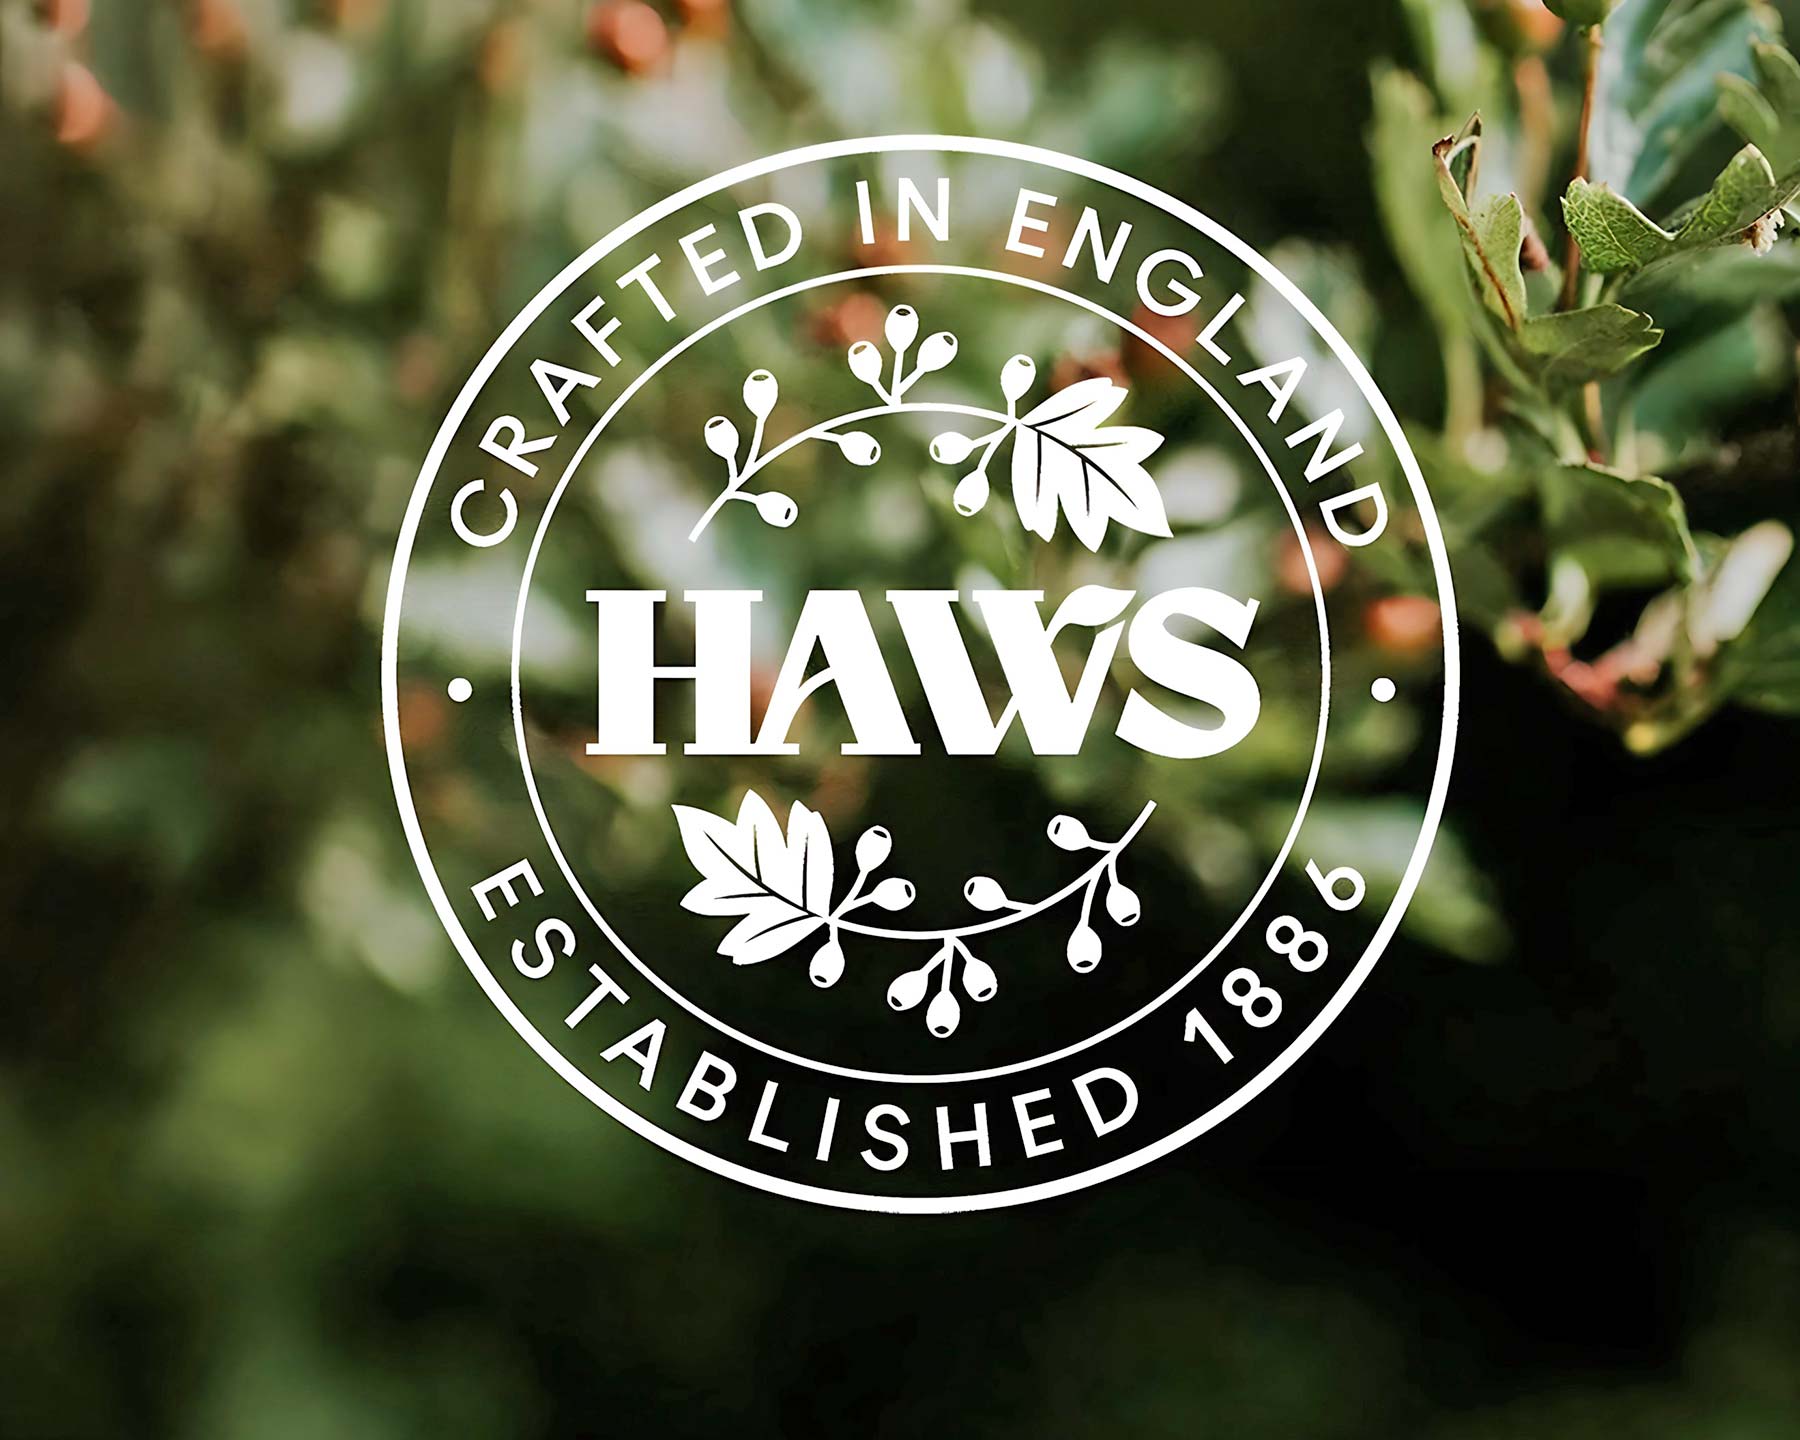 Haws - a British gardening tradition